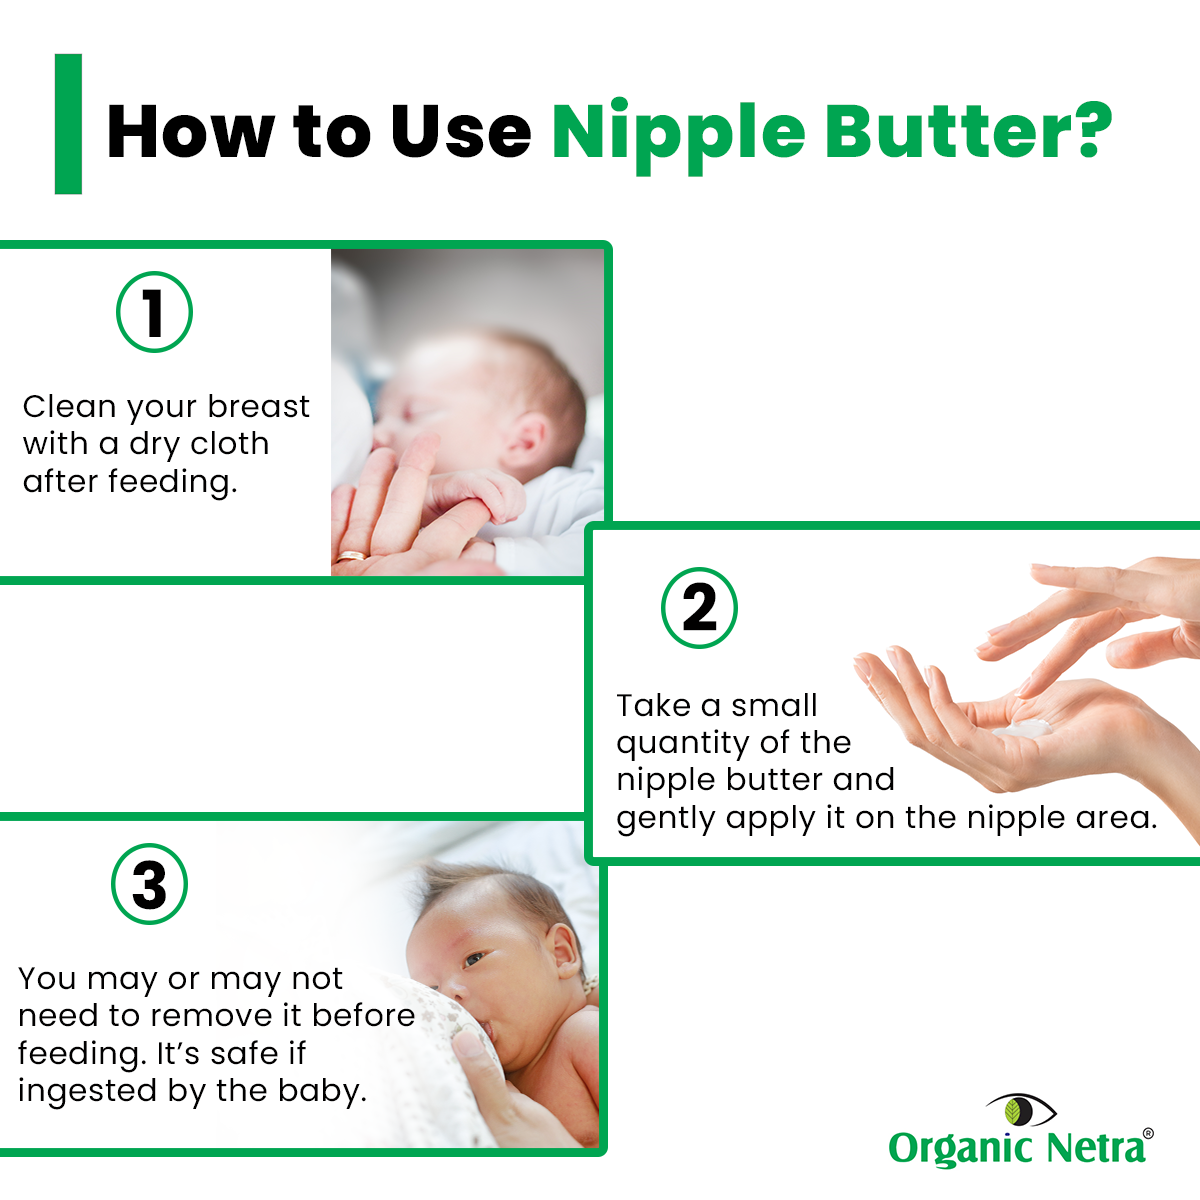 Natural Nipple Butter - 50g